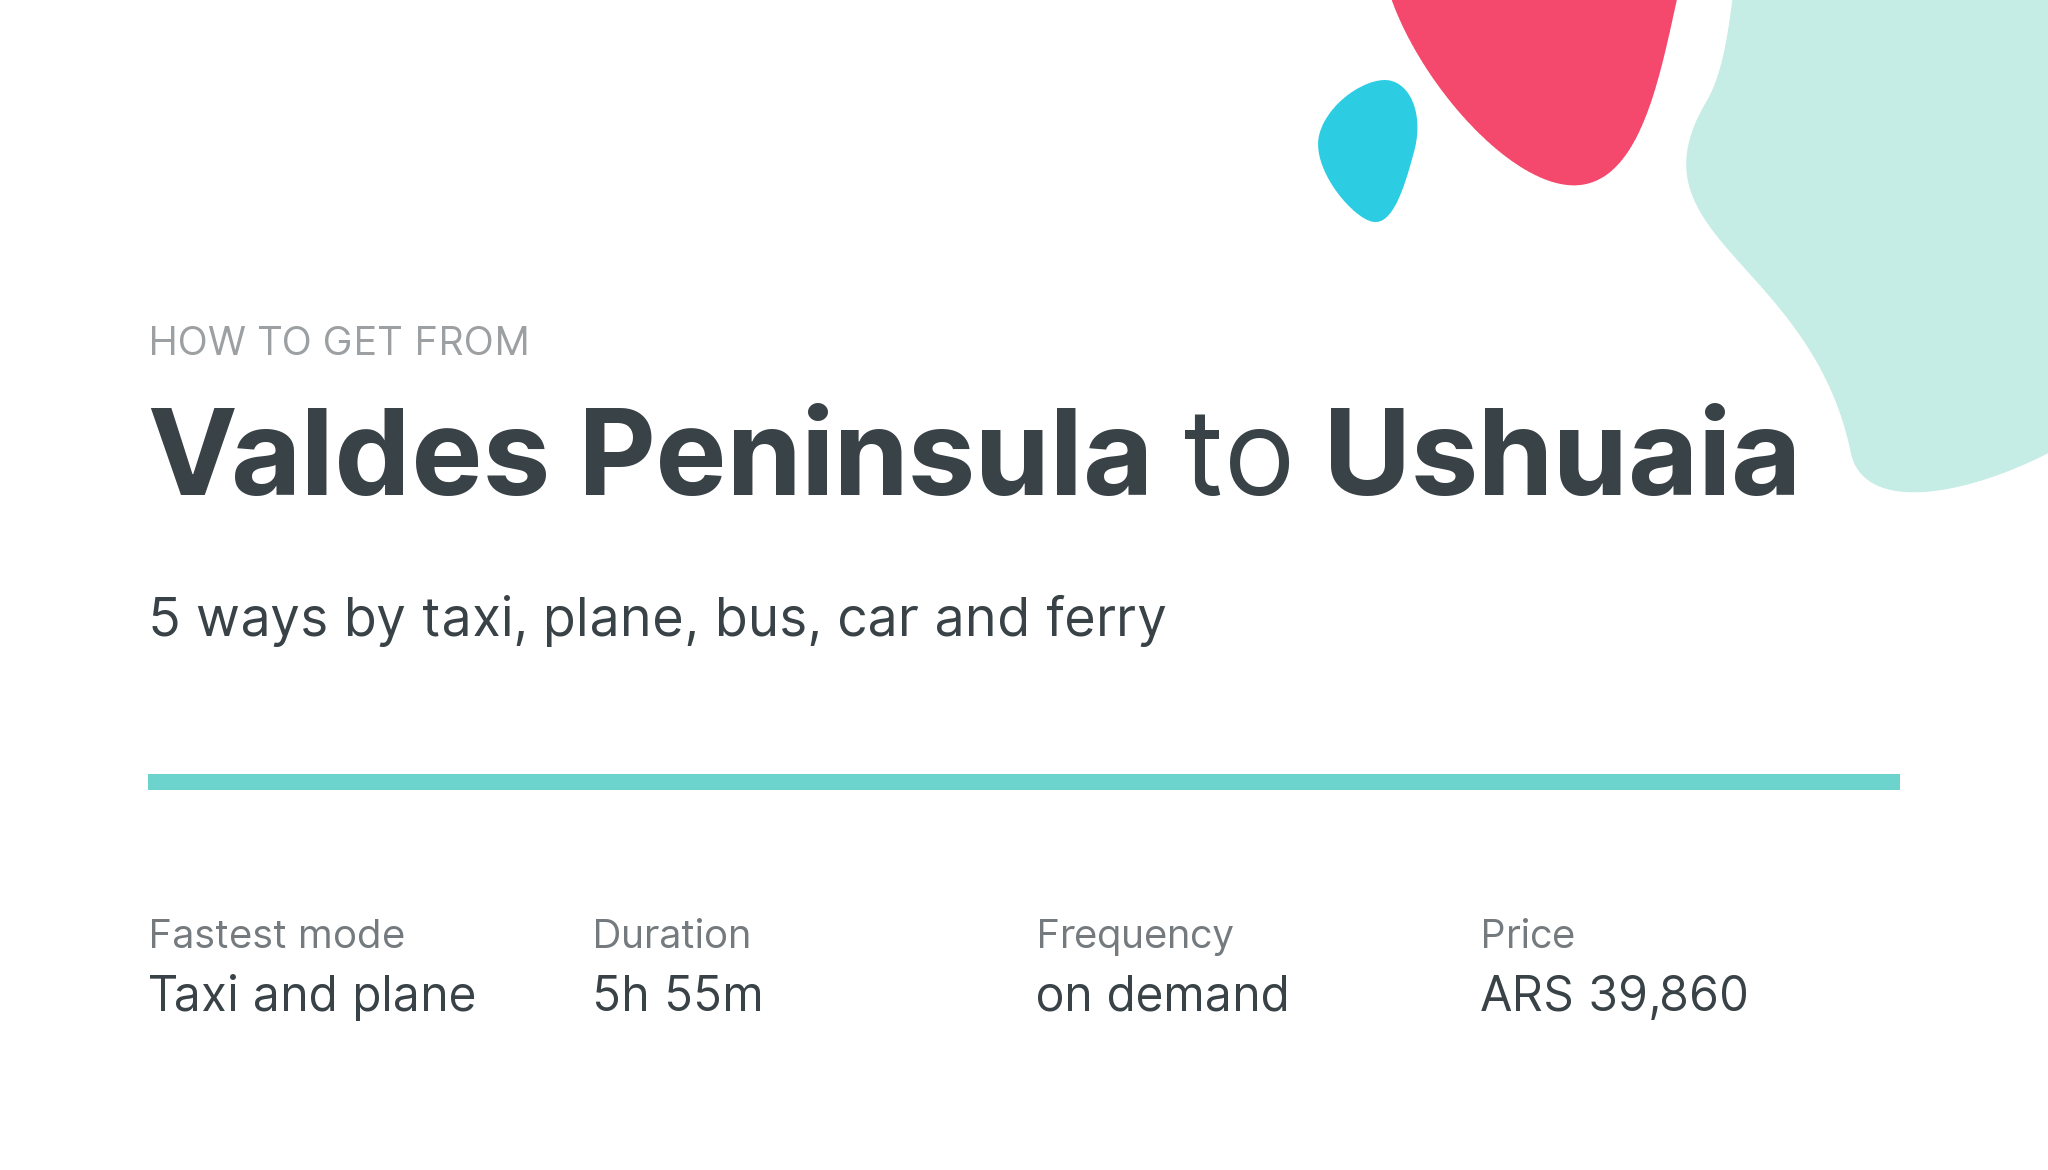 How do I get from Valdes Peninsula to Ushuaia